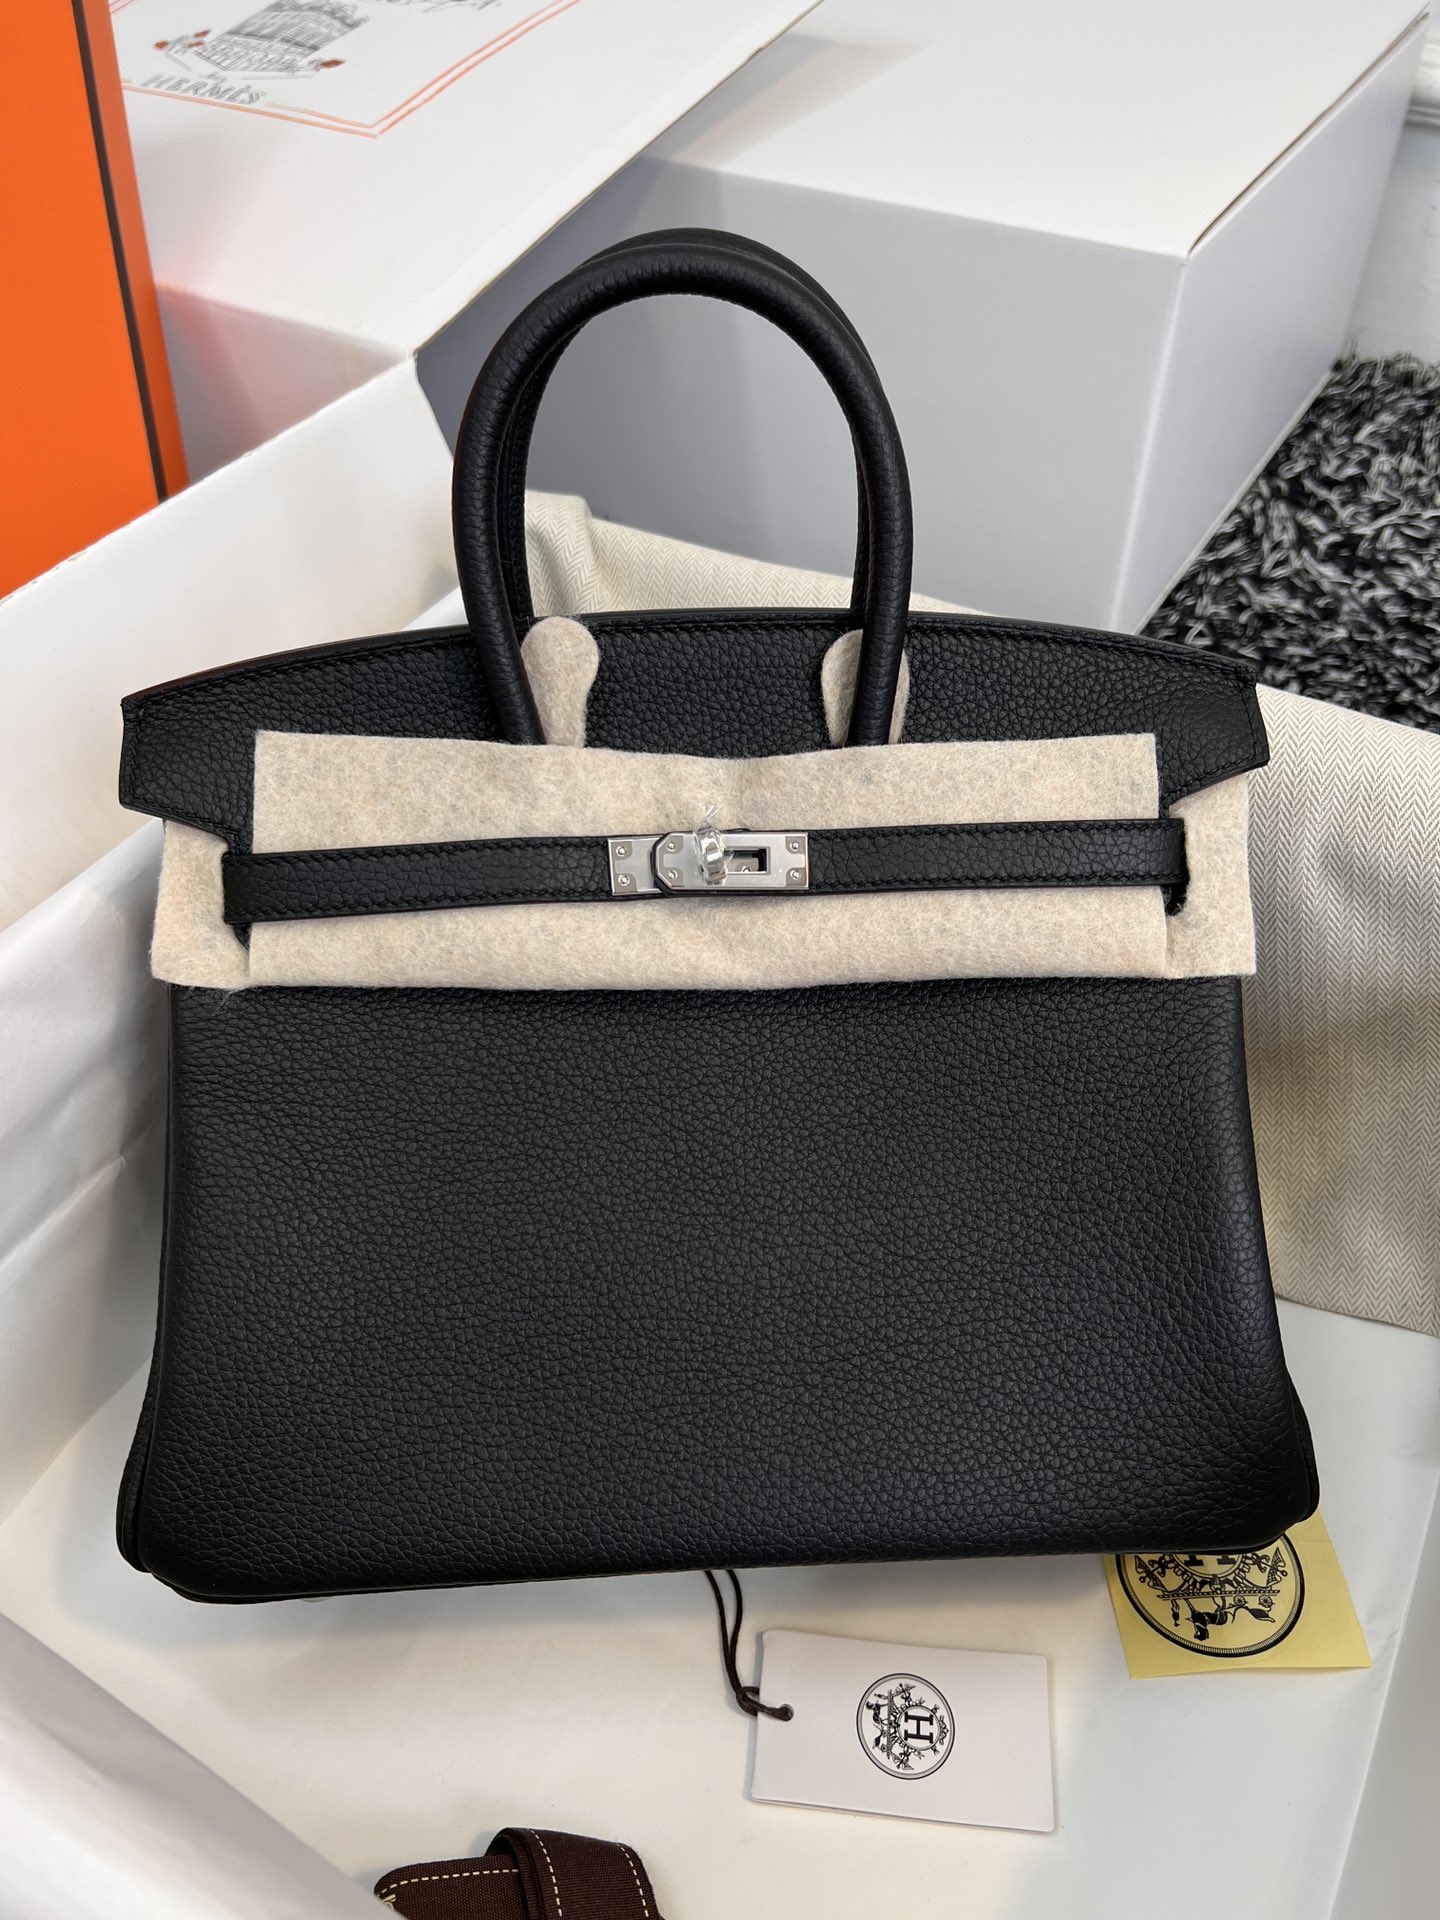 Hermes Birkin Bags Handbags Buy best quality Replica